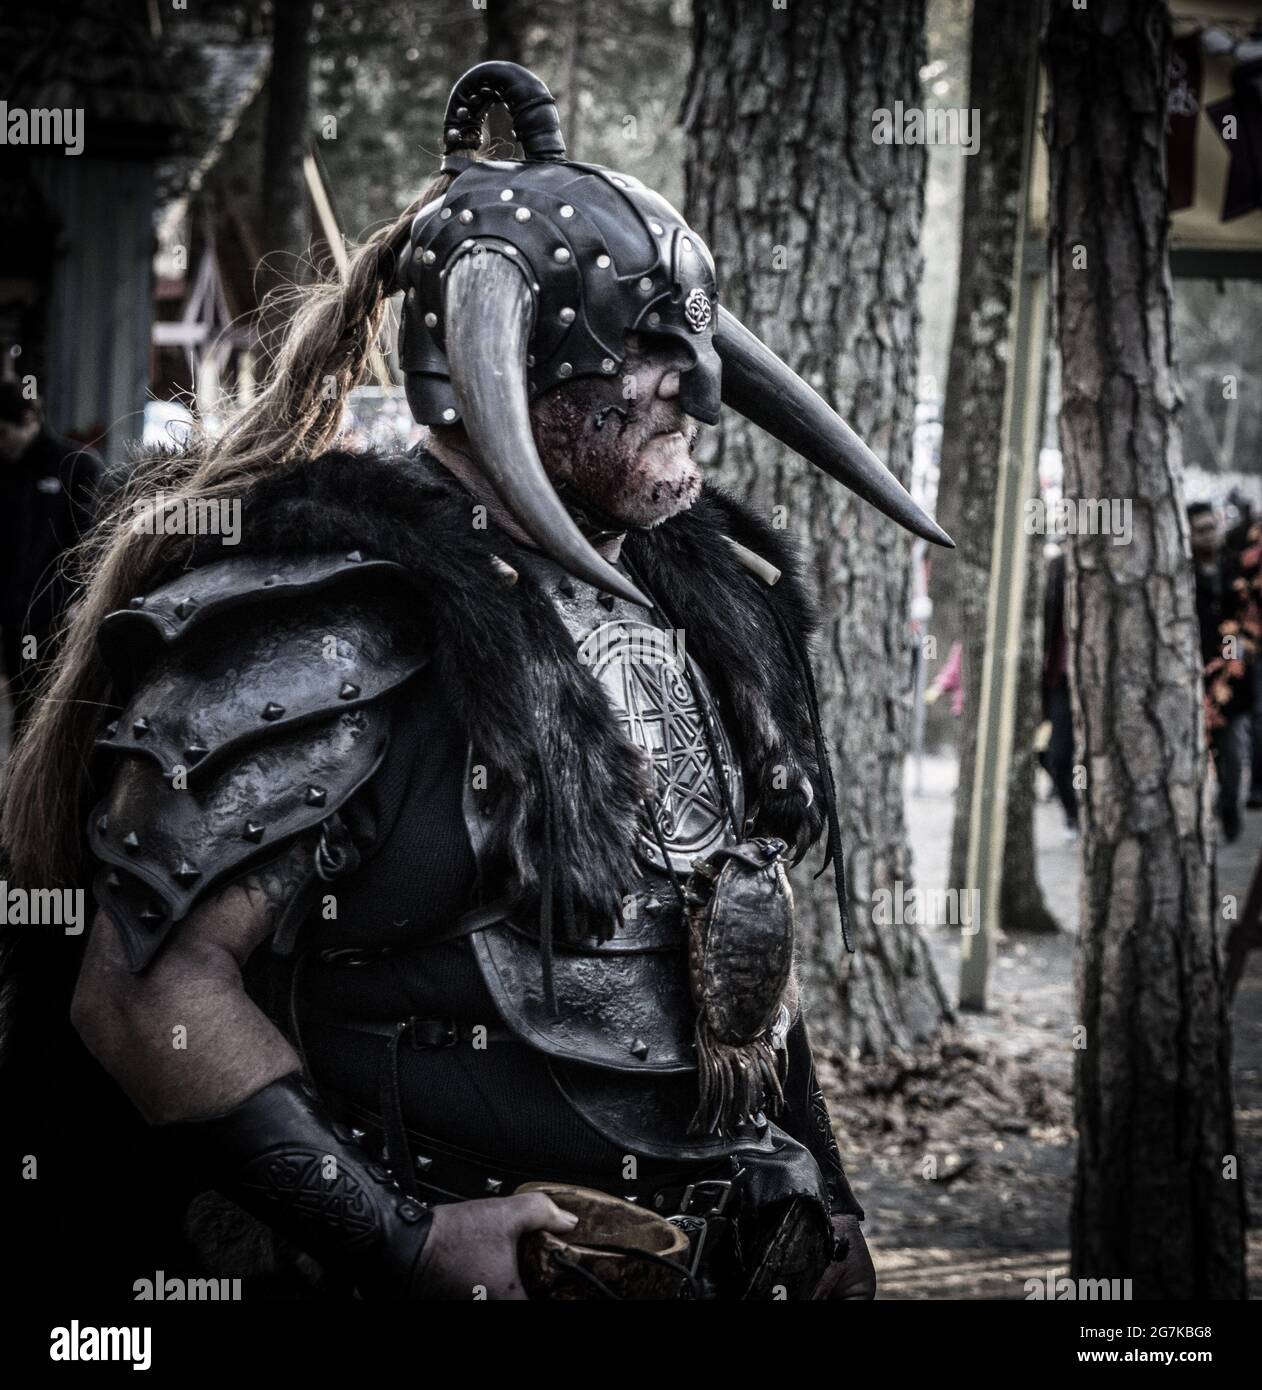 Viking raider at the Huntersville NC Renaissance Festival Stock Photo